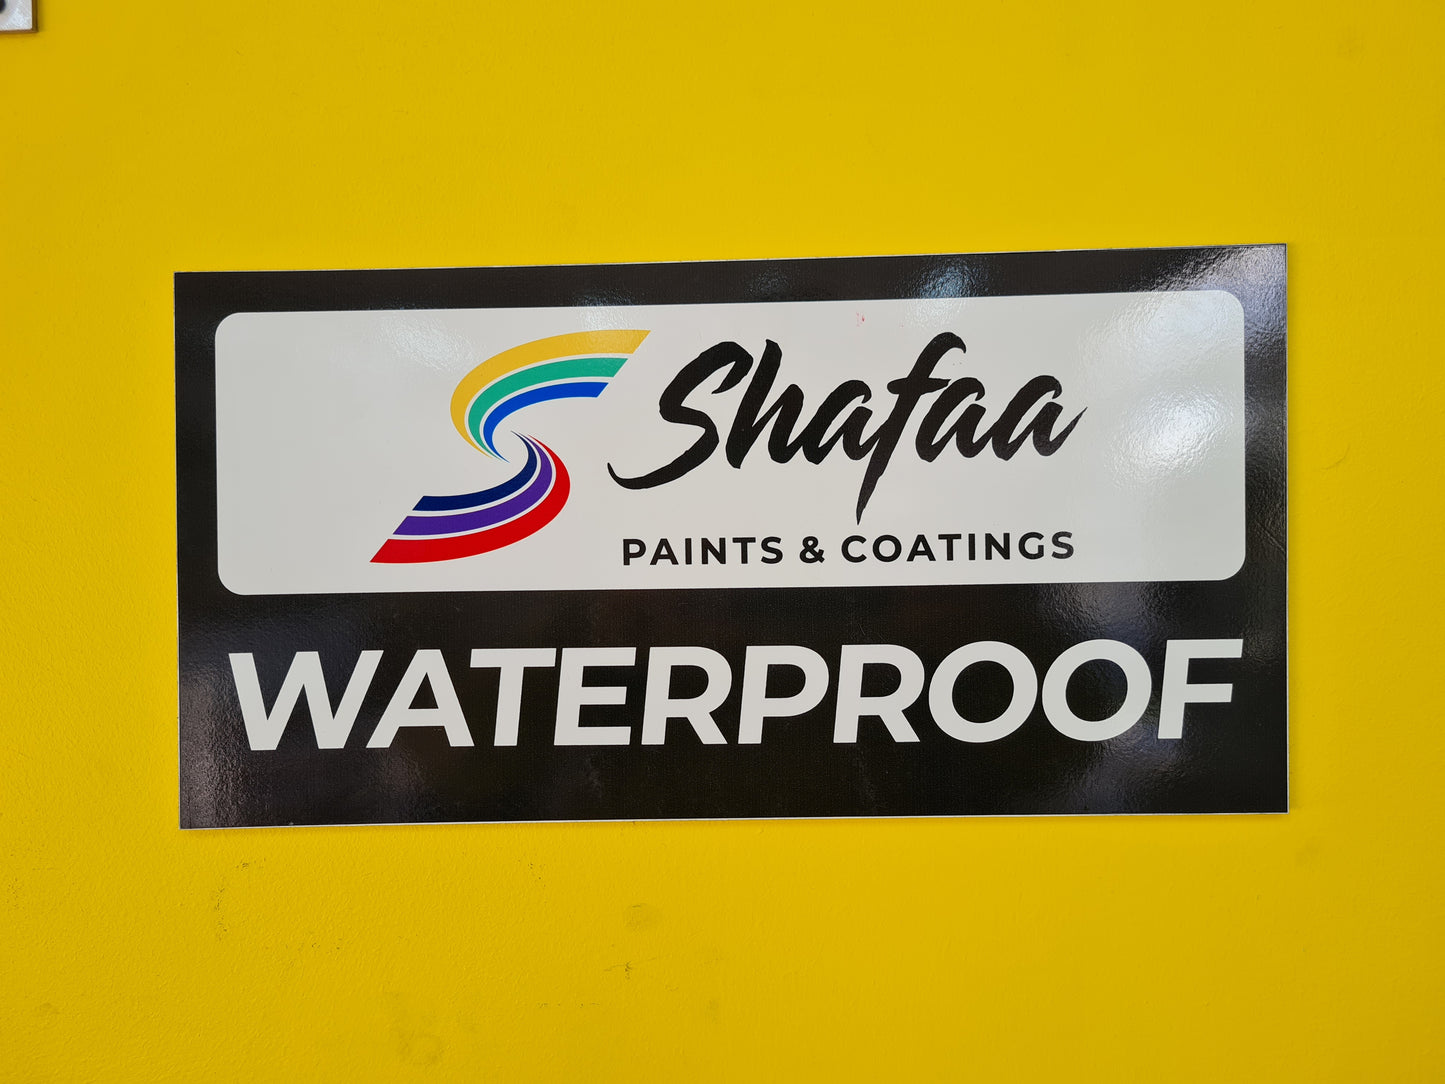 Waterproofing Paints